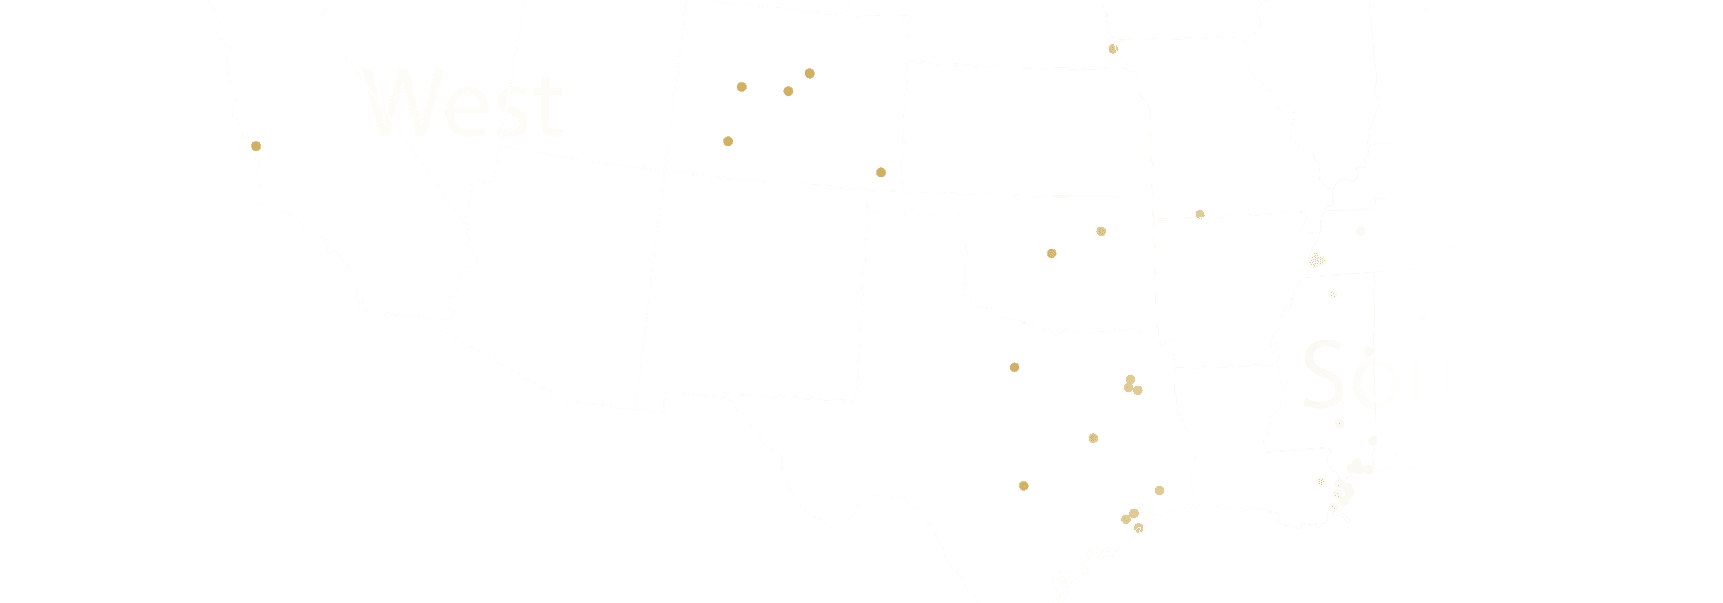 West US Map